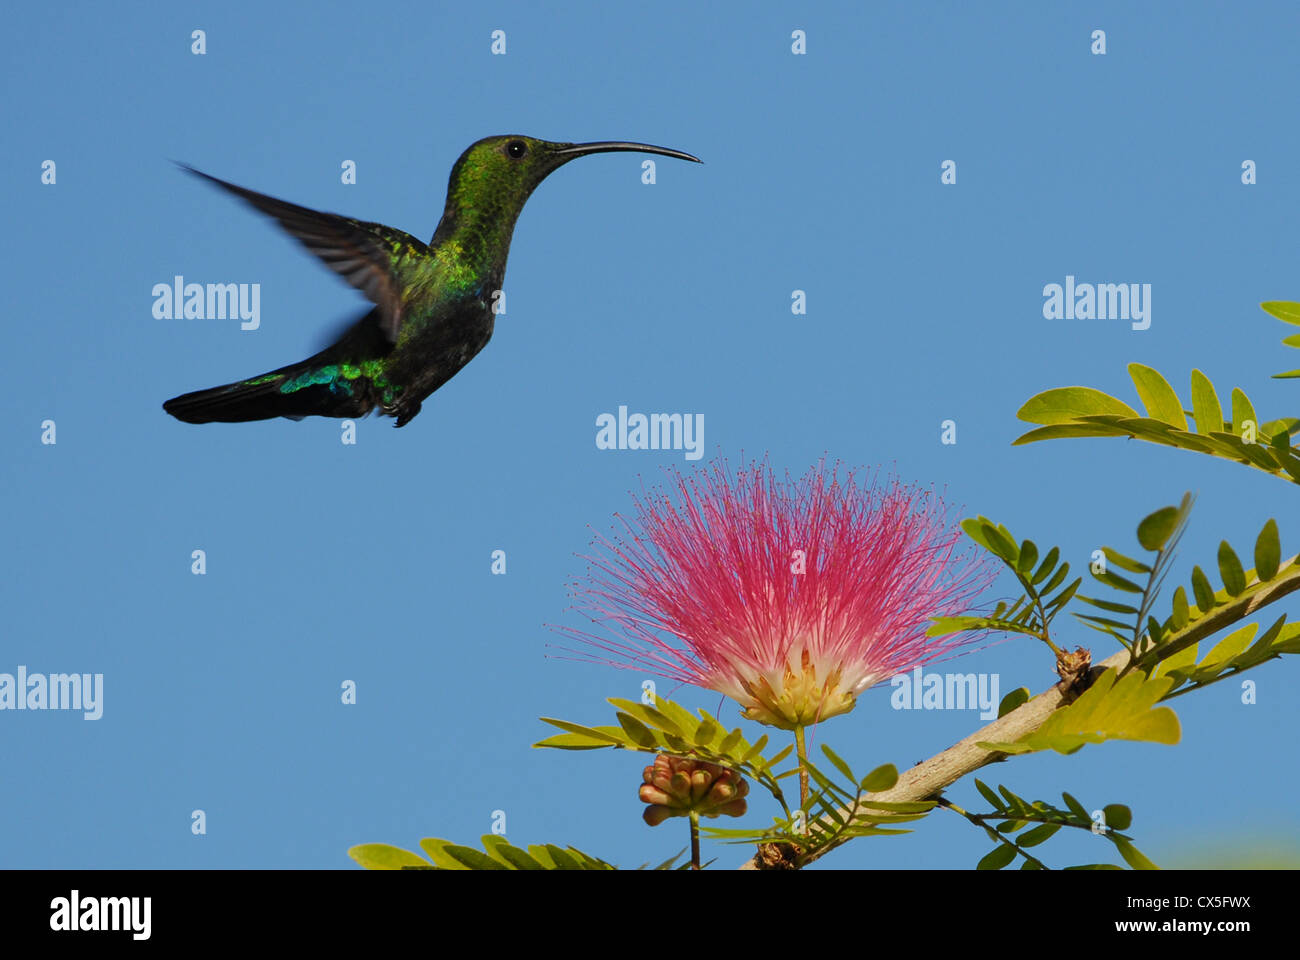 Green-throated Carib Hummingbird feeding on Red Powder Puff flower Stock Photo